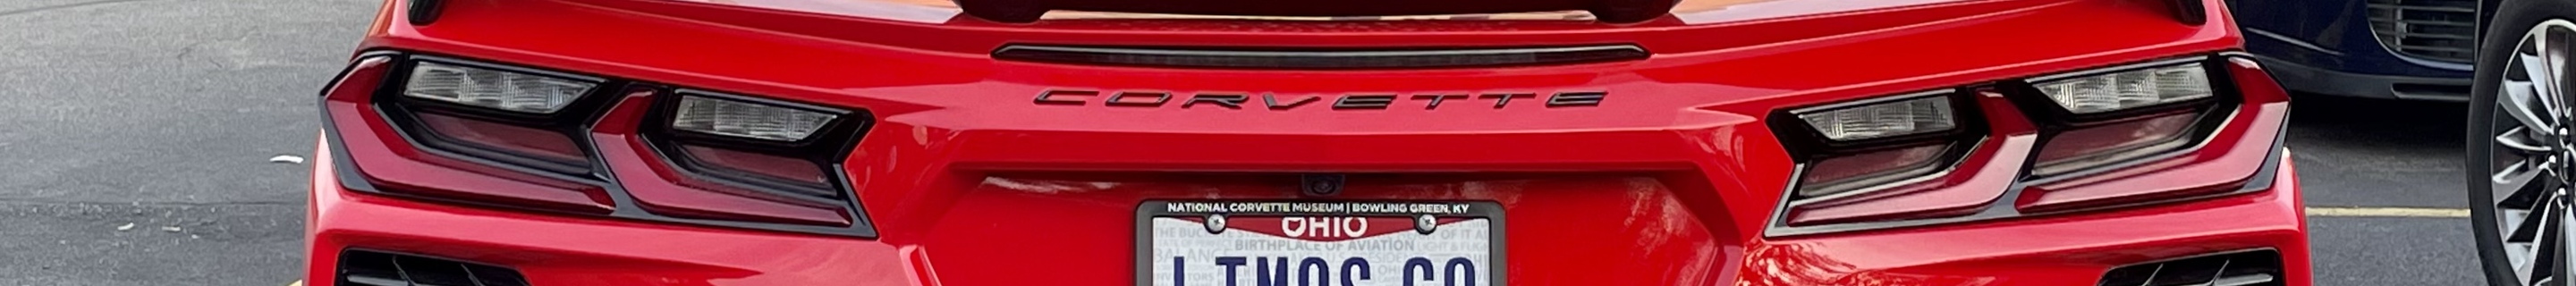 Chevrolet Corvette C8 Convertible